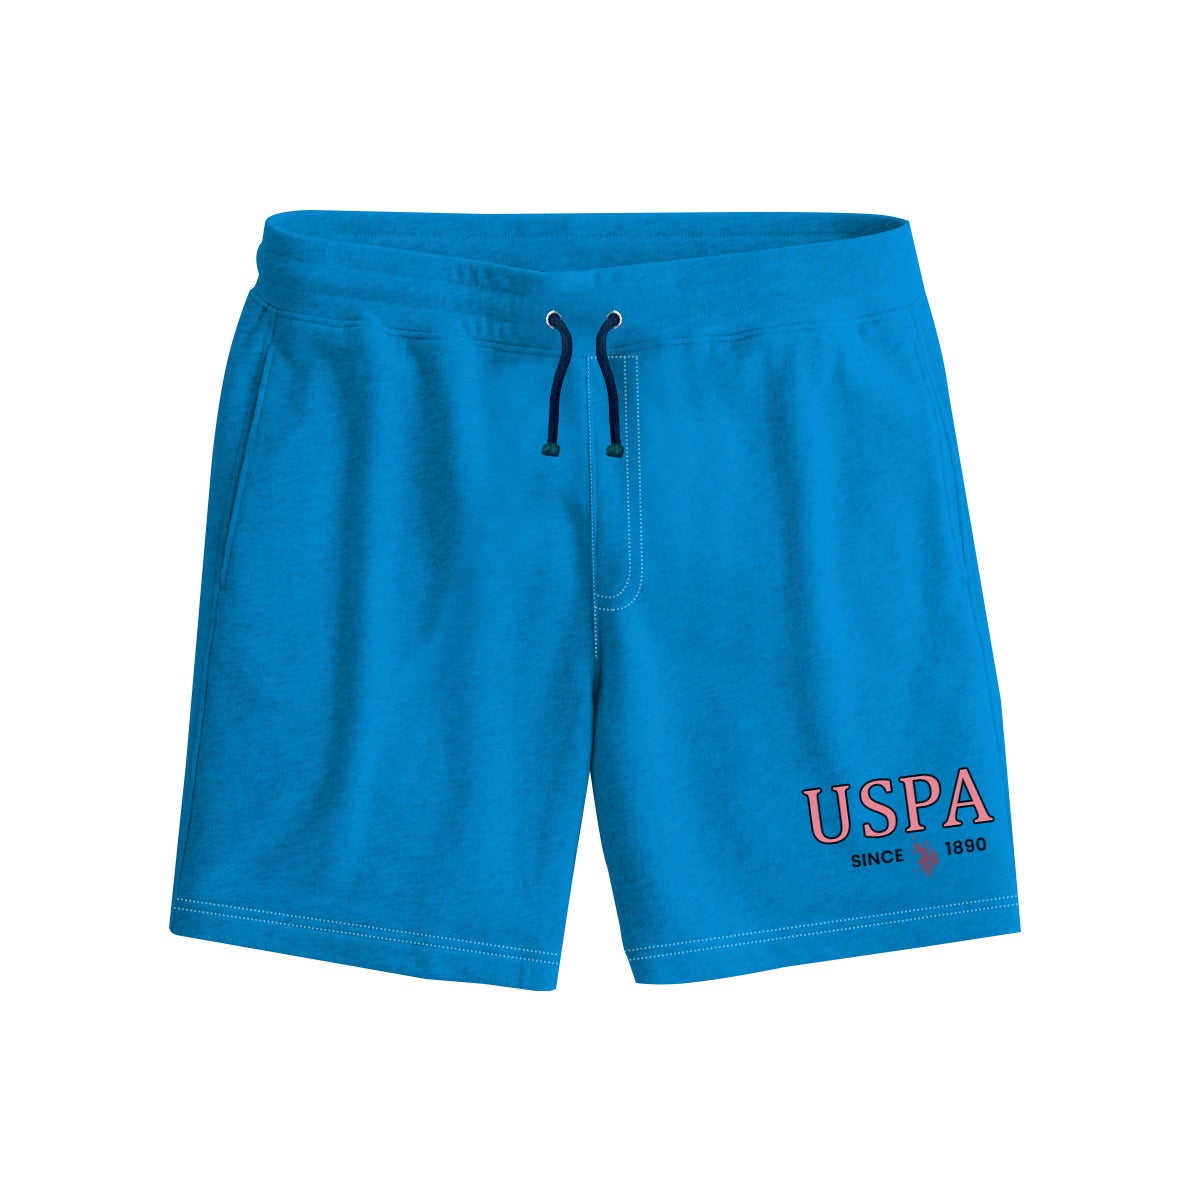 USPA Printed Two Quarter Summer Shorts